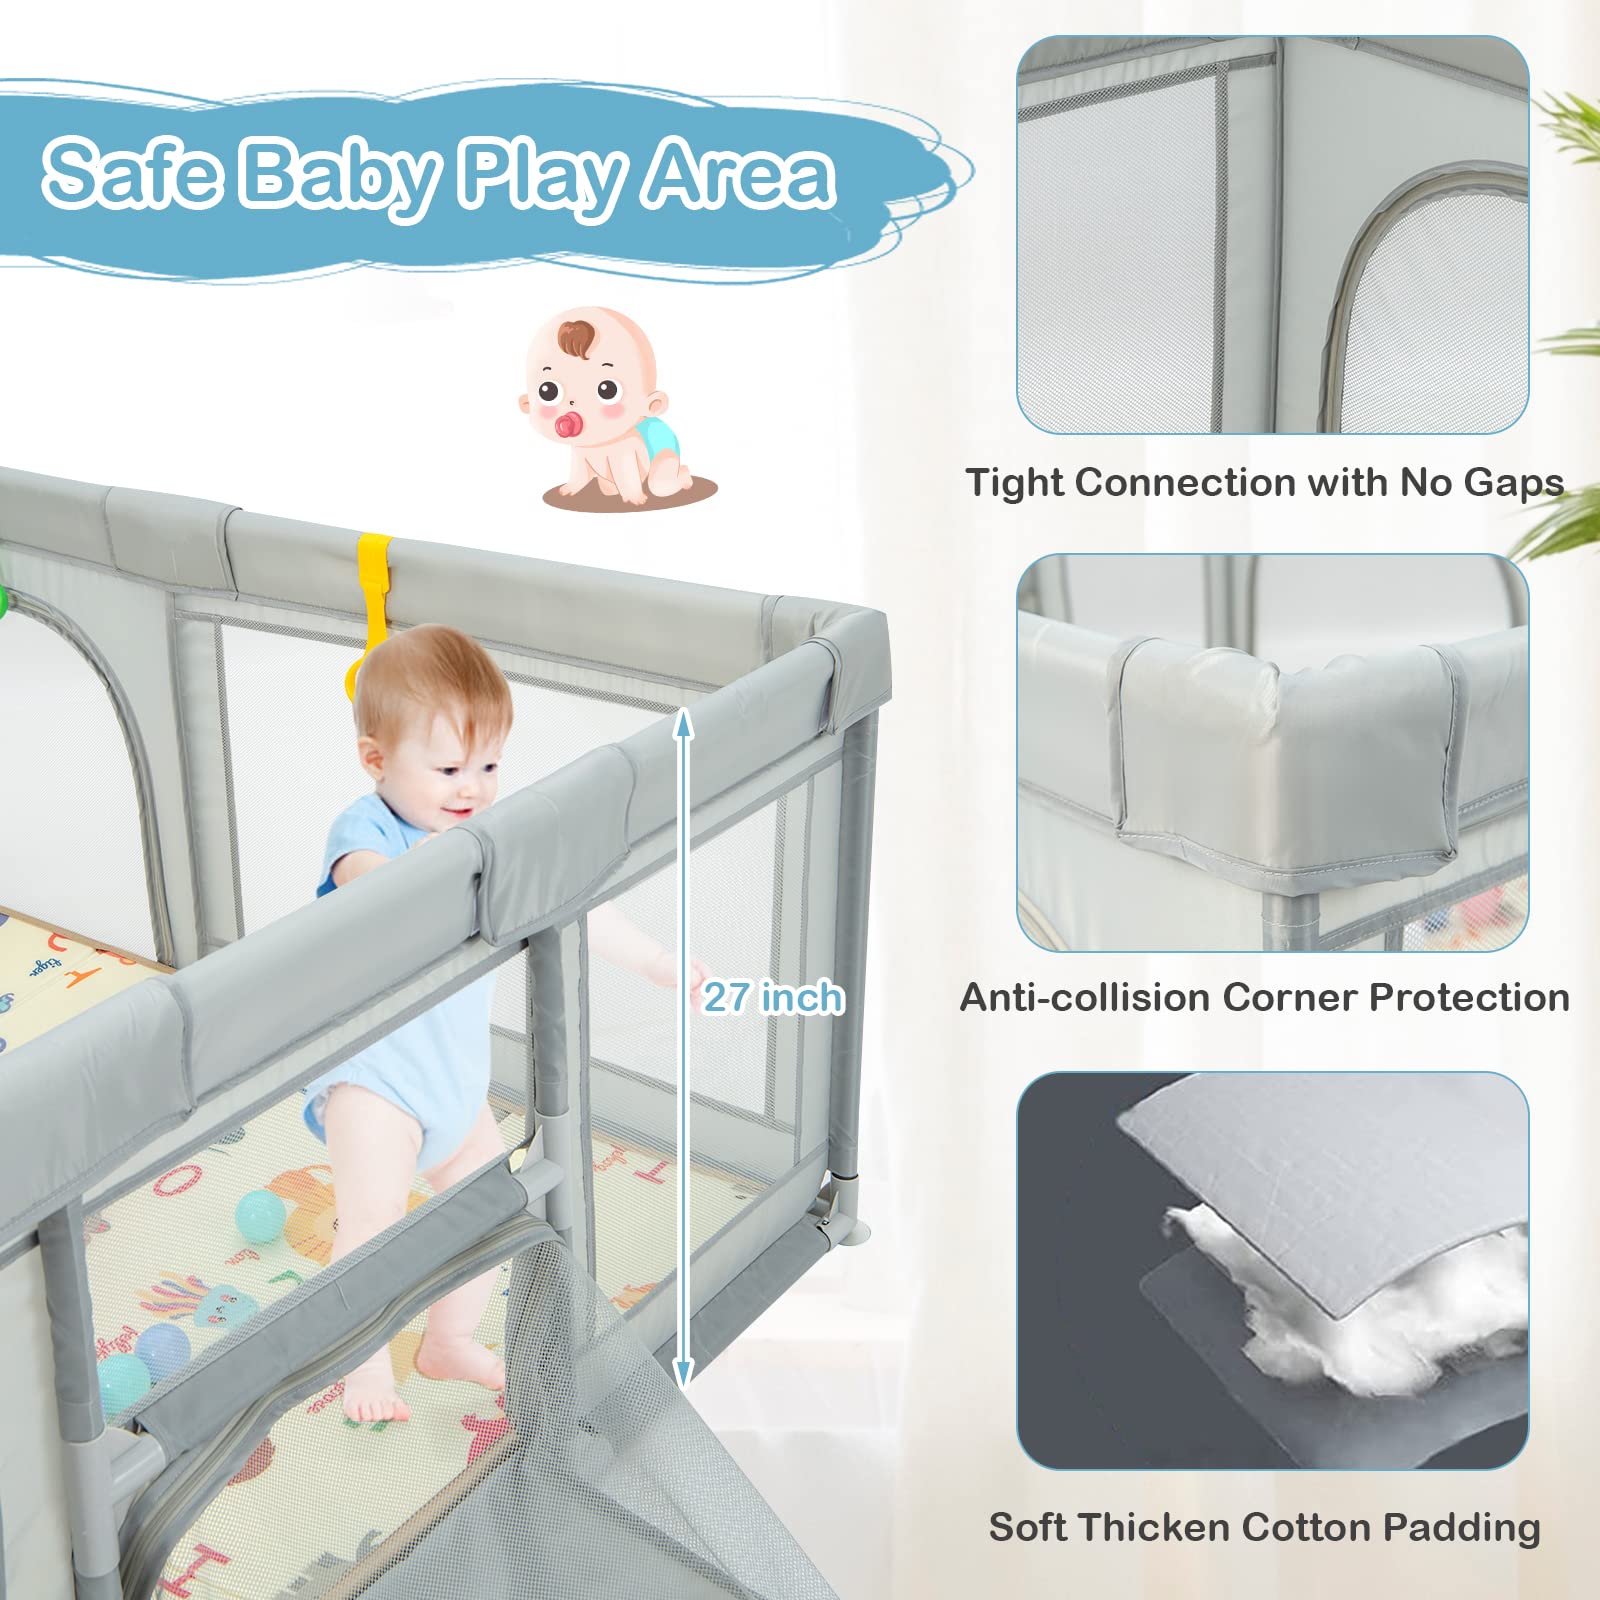 4x Edge Protection Corner Protection Corners Protection Baby